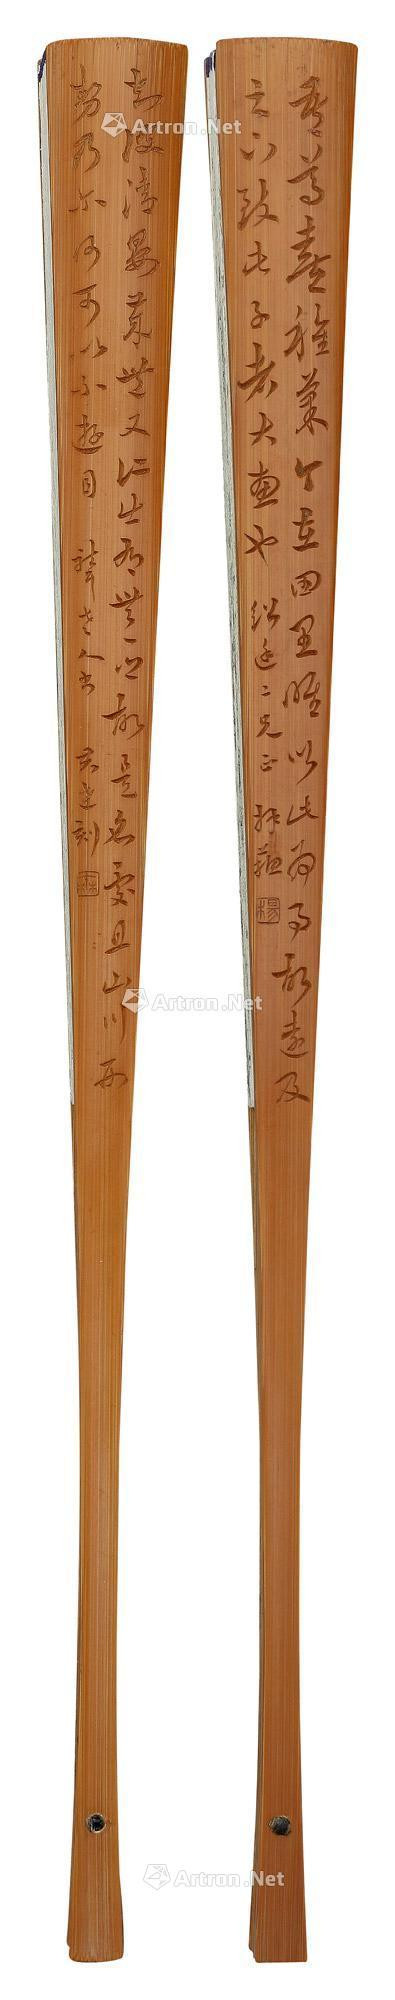 A BAMBOO FAN RIB CARVED WITH YANG BAISU’S CALLIGRAPHY IN CURSIVE SCRIPT BY QIN JUNDA